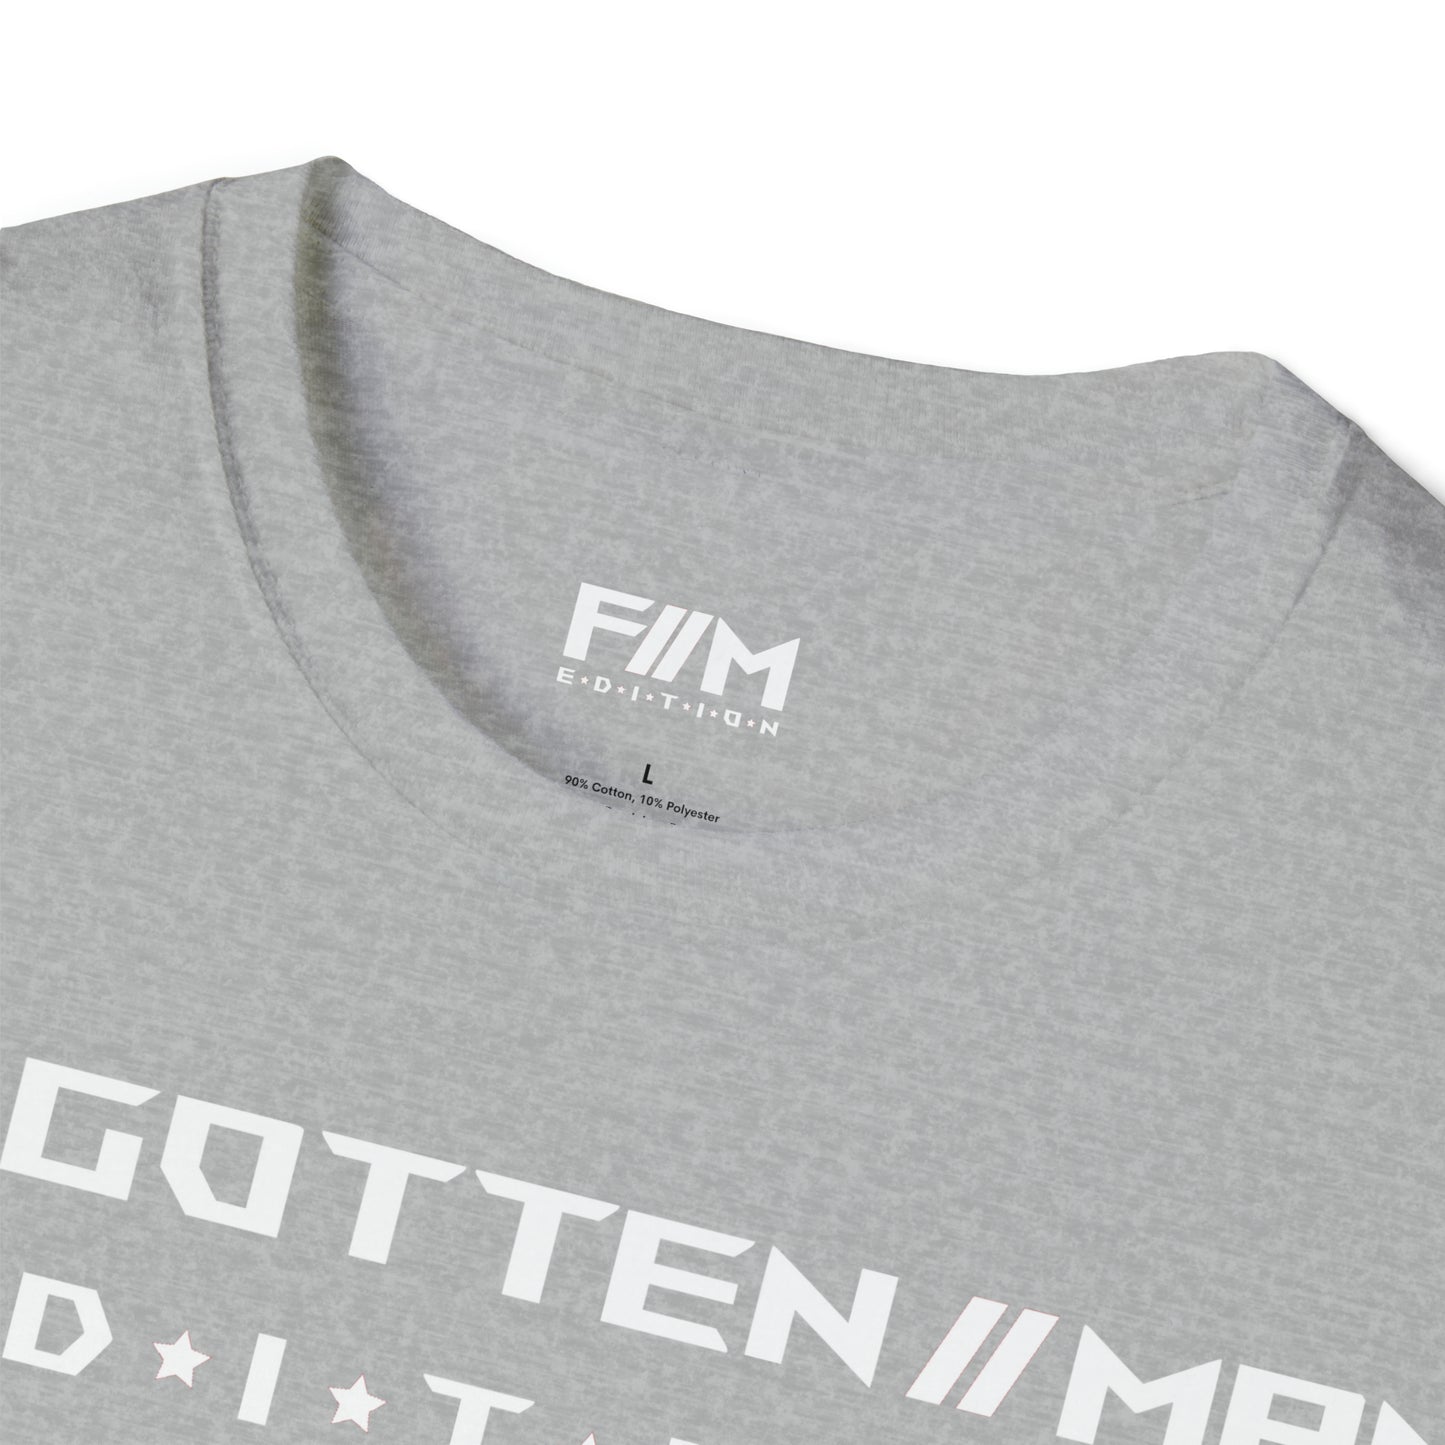 Forgotten Man Softstyle Value T-Shirt